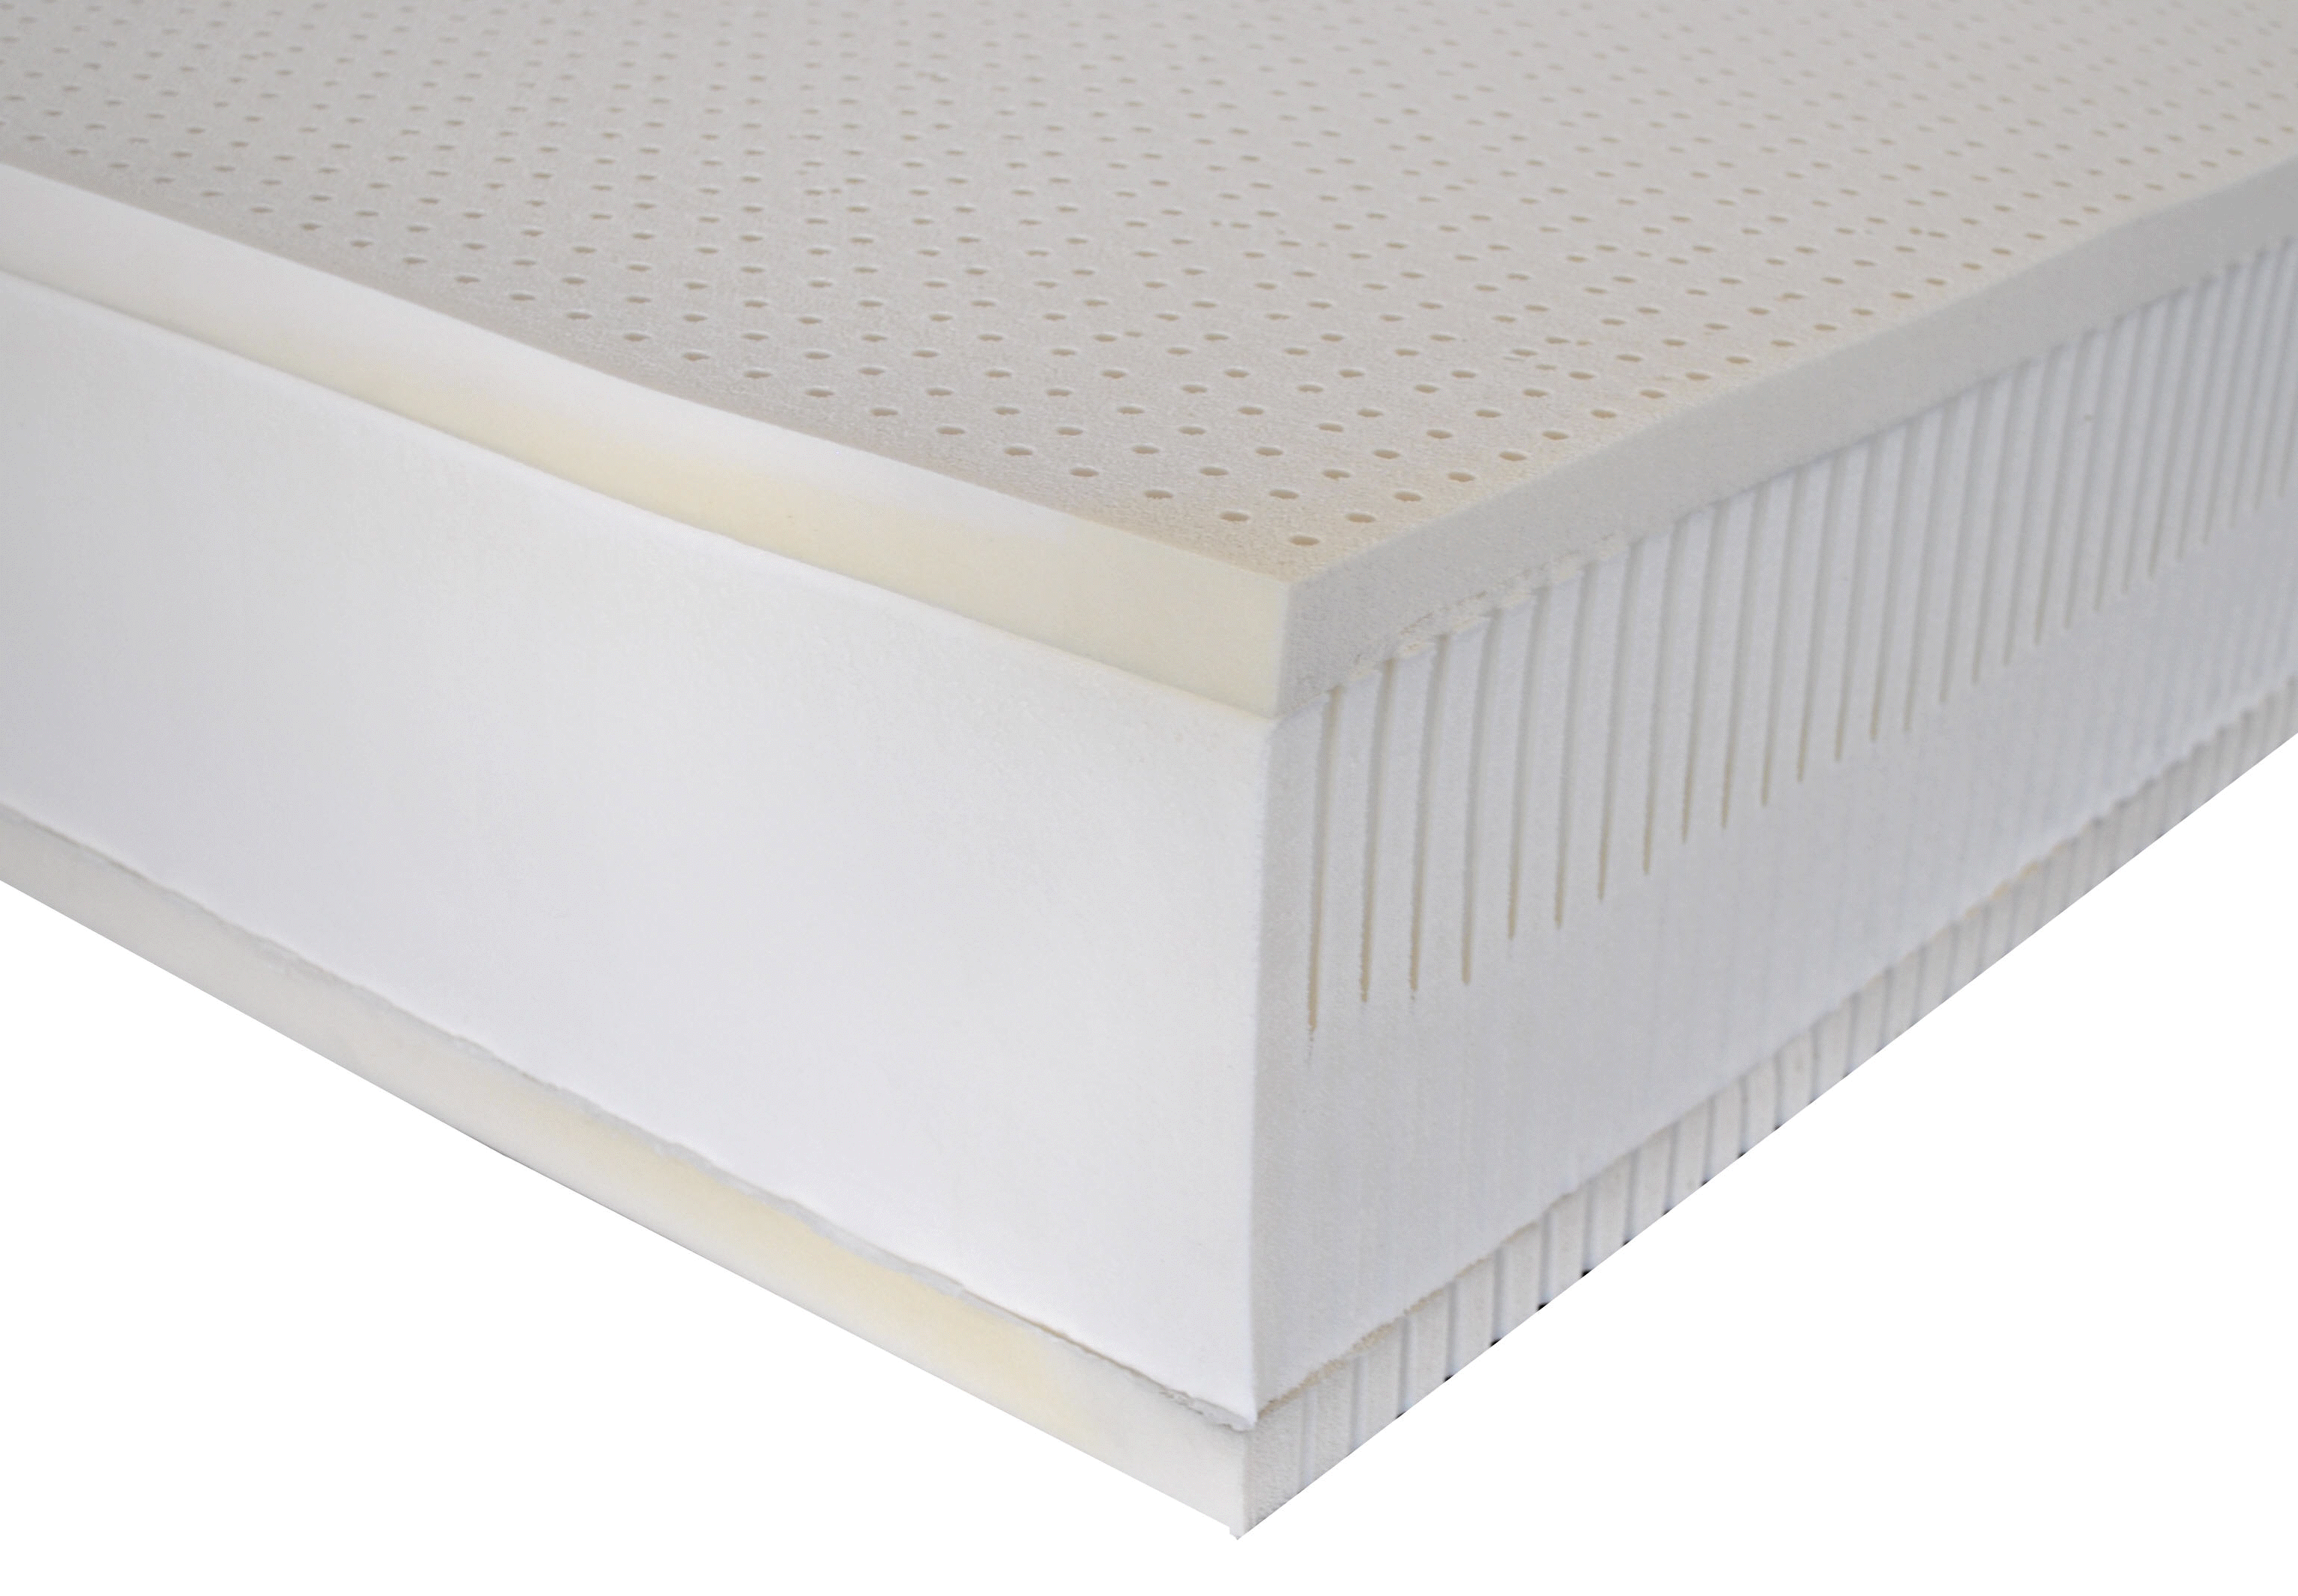 San Bernardino latex mattress hospital bed